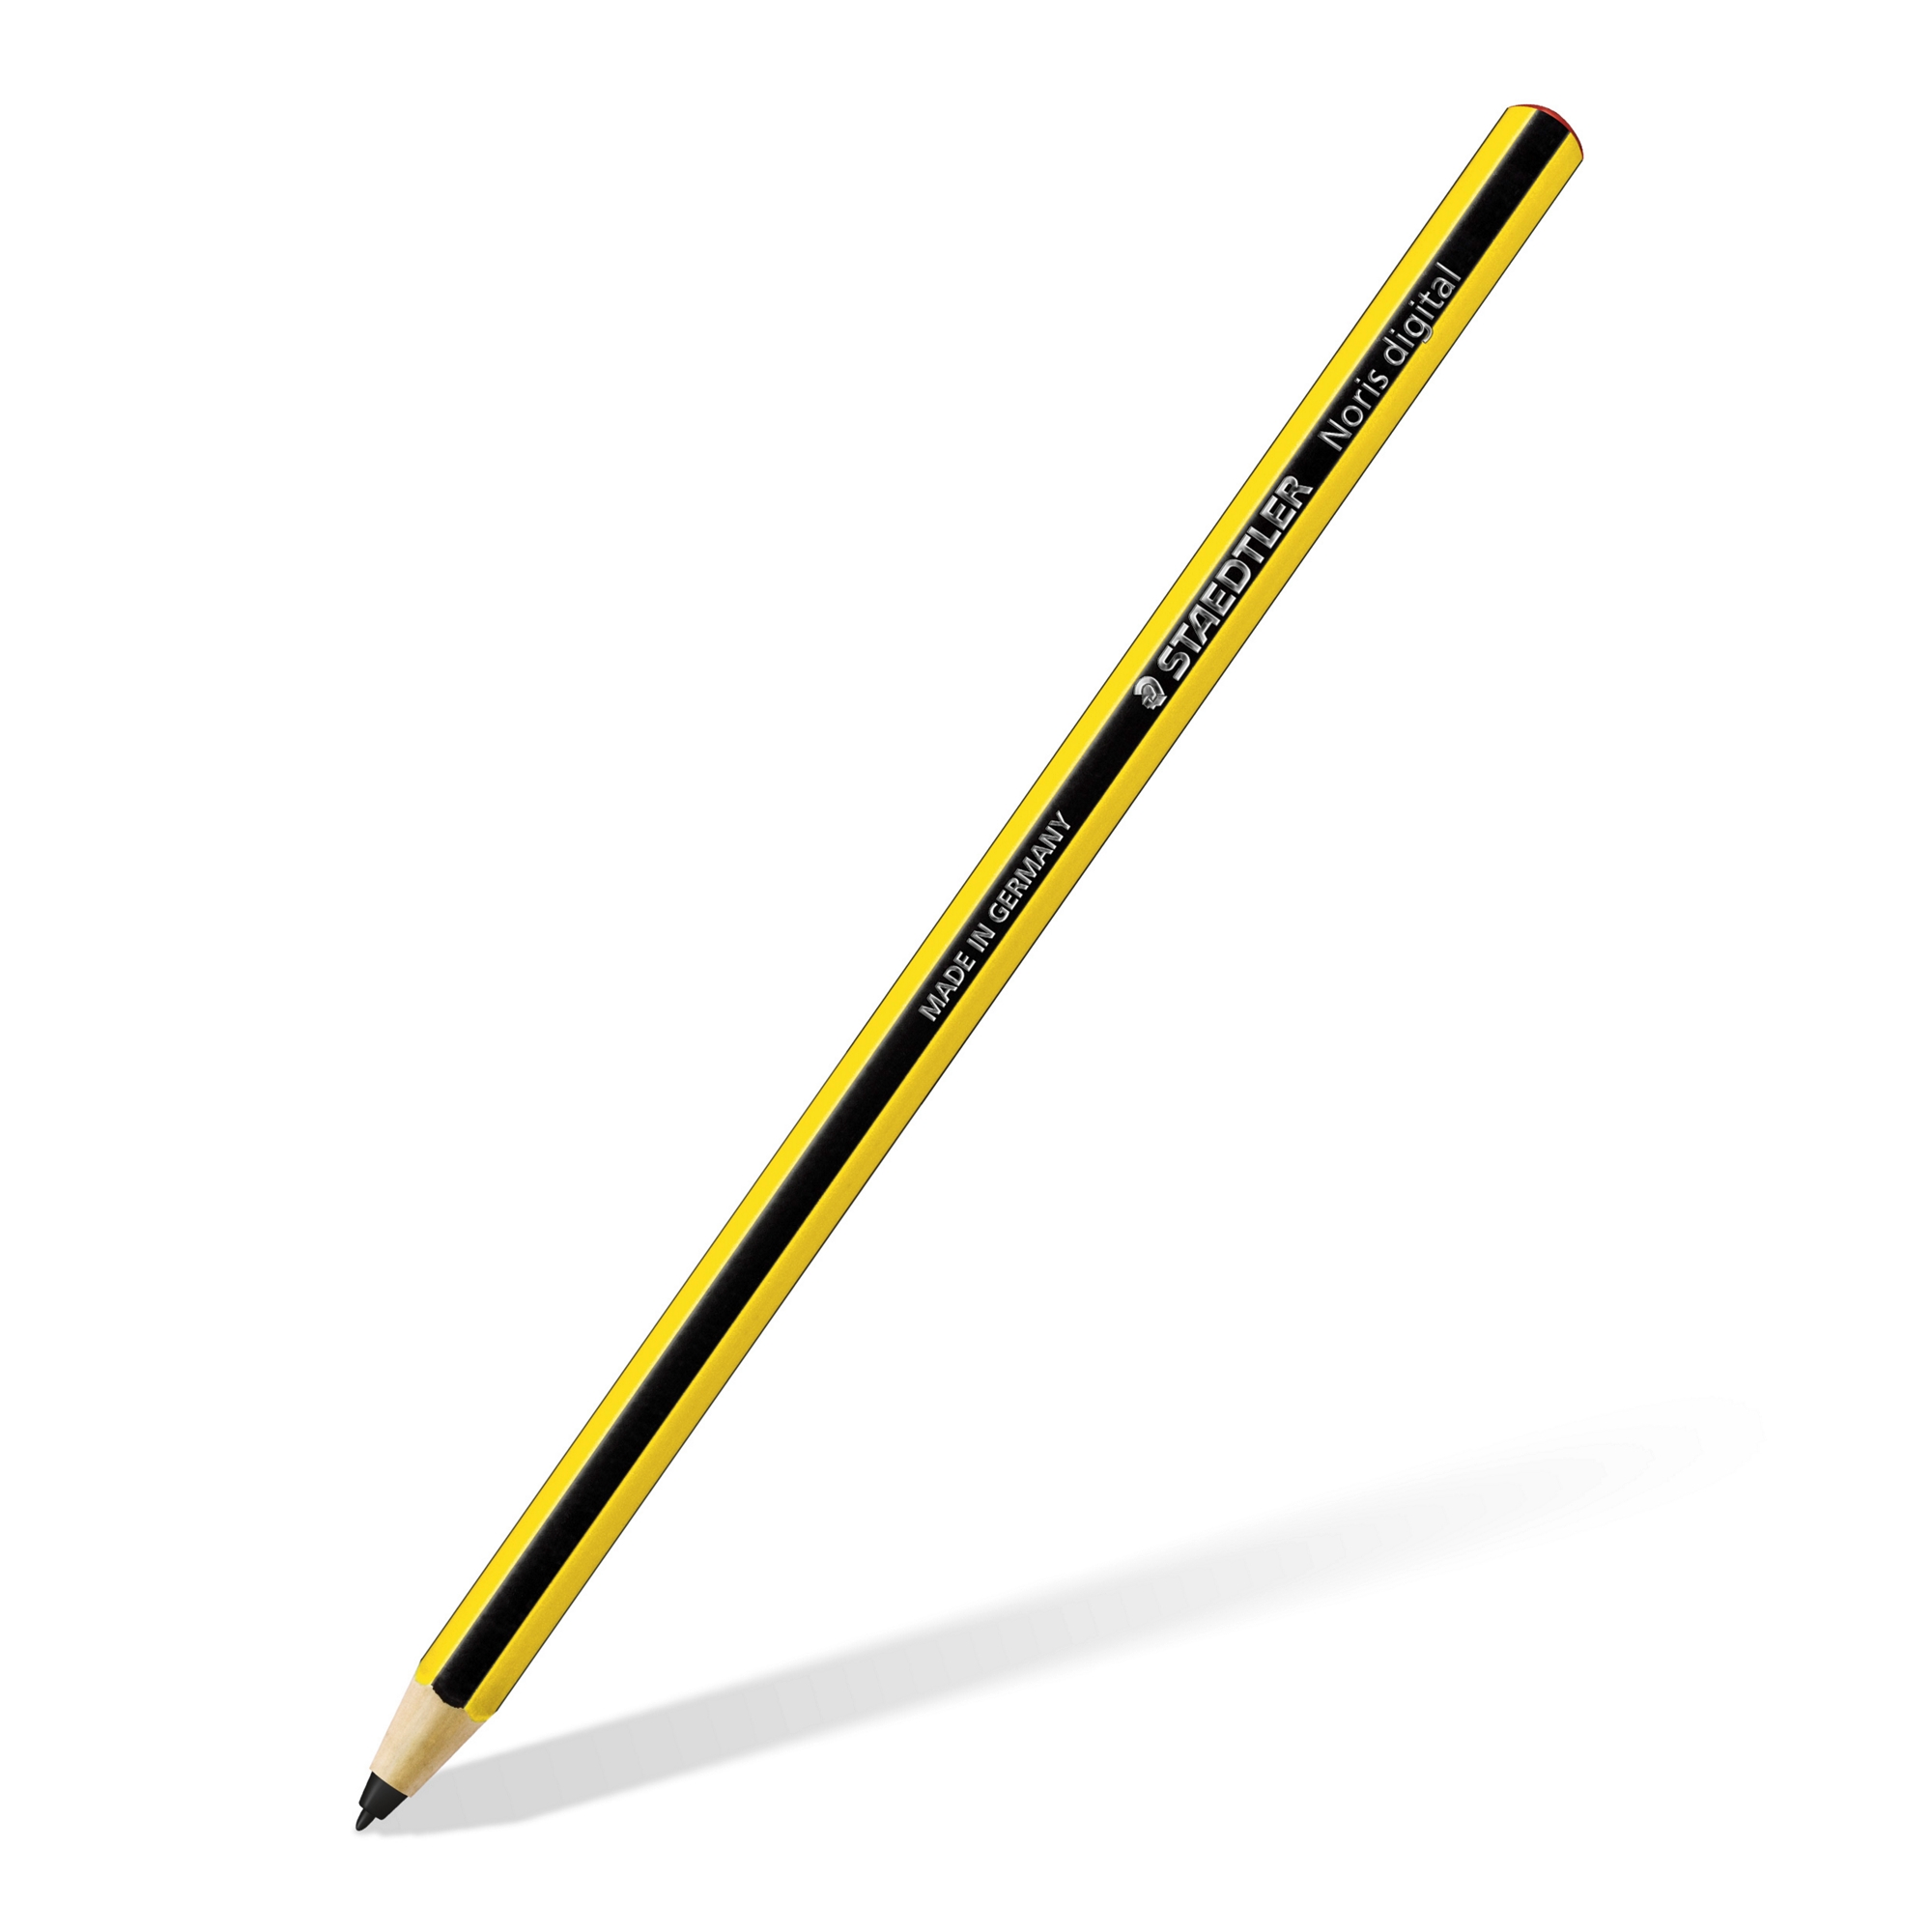 STAEDTLER 4B Pencil Price in India - Buy STAEDTLER 4B Pencil online at